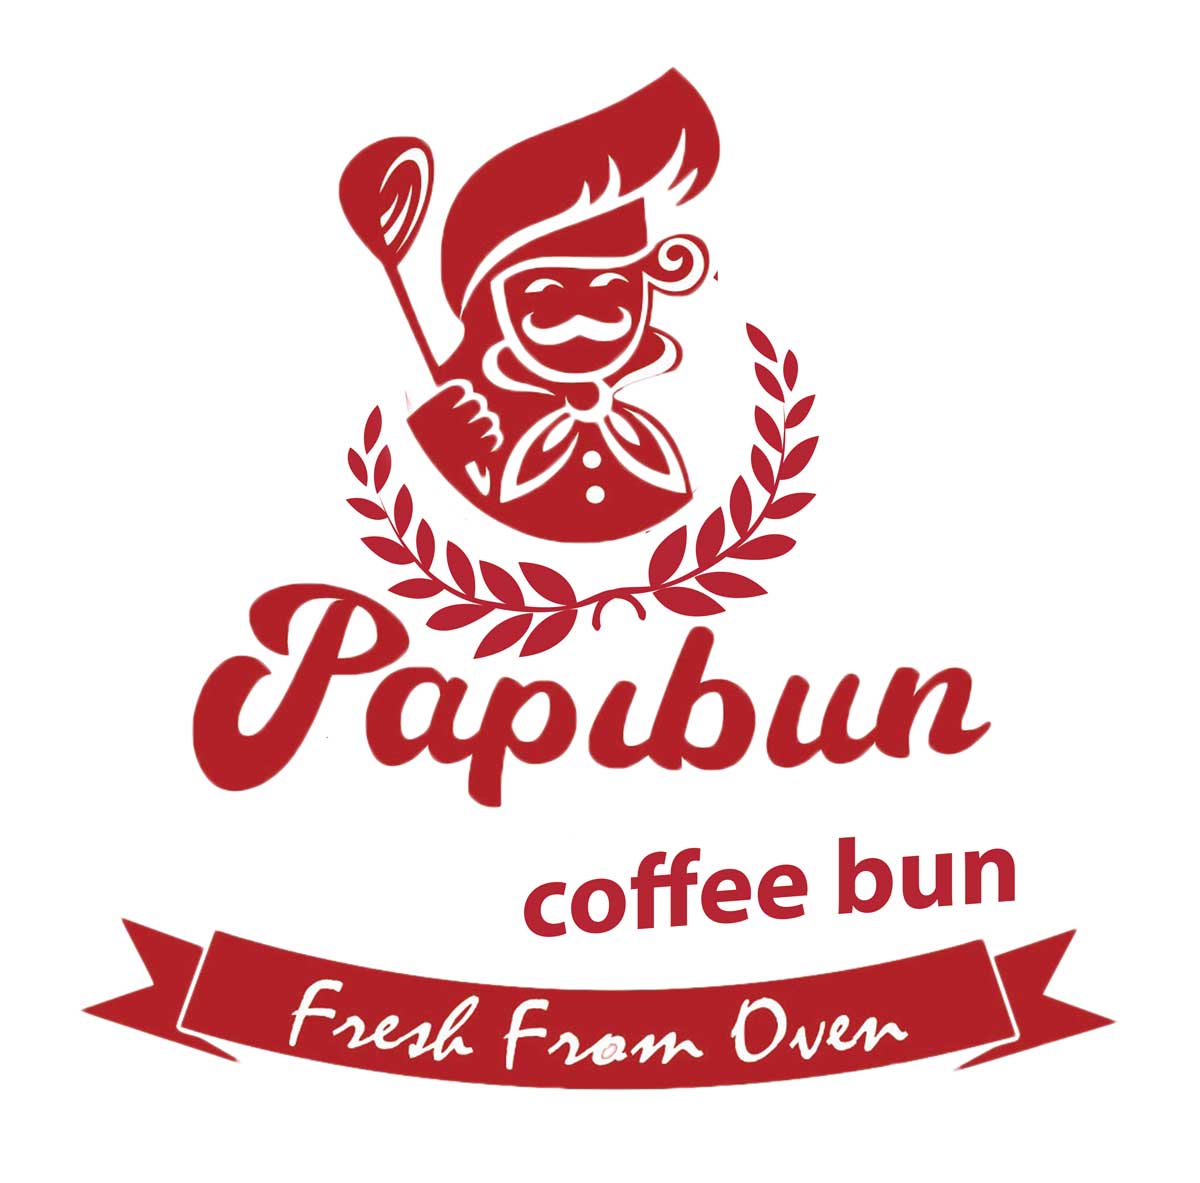 Logo Toko Kue Papibun Desain Logo Bakery dan Cakery Yang Membuat Usaha Laku Dan Laris Manis